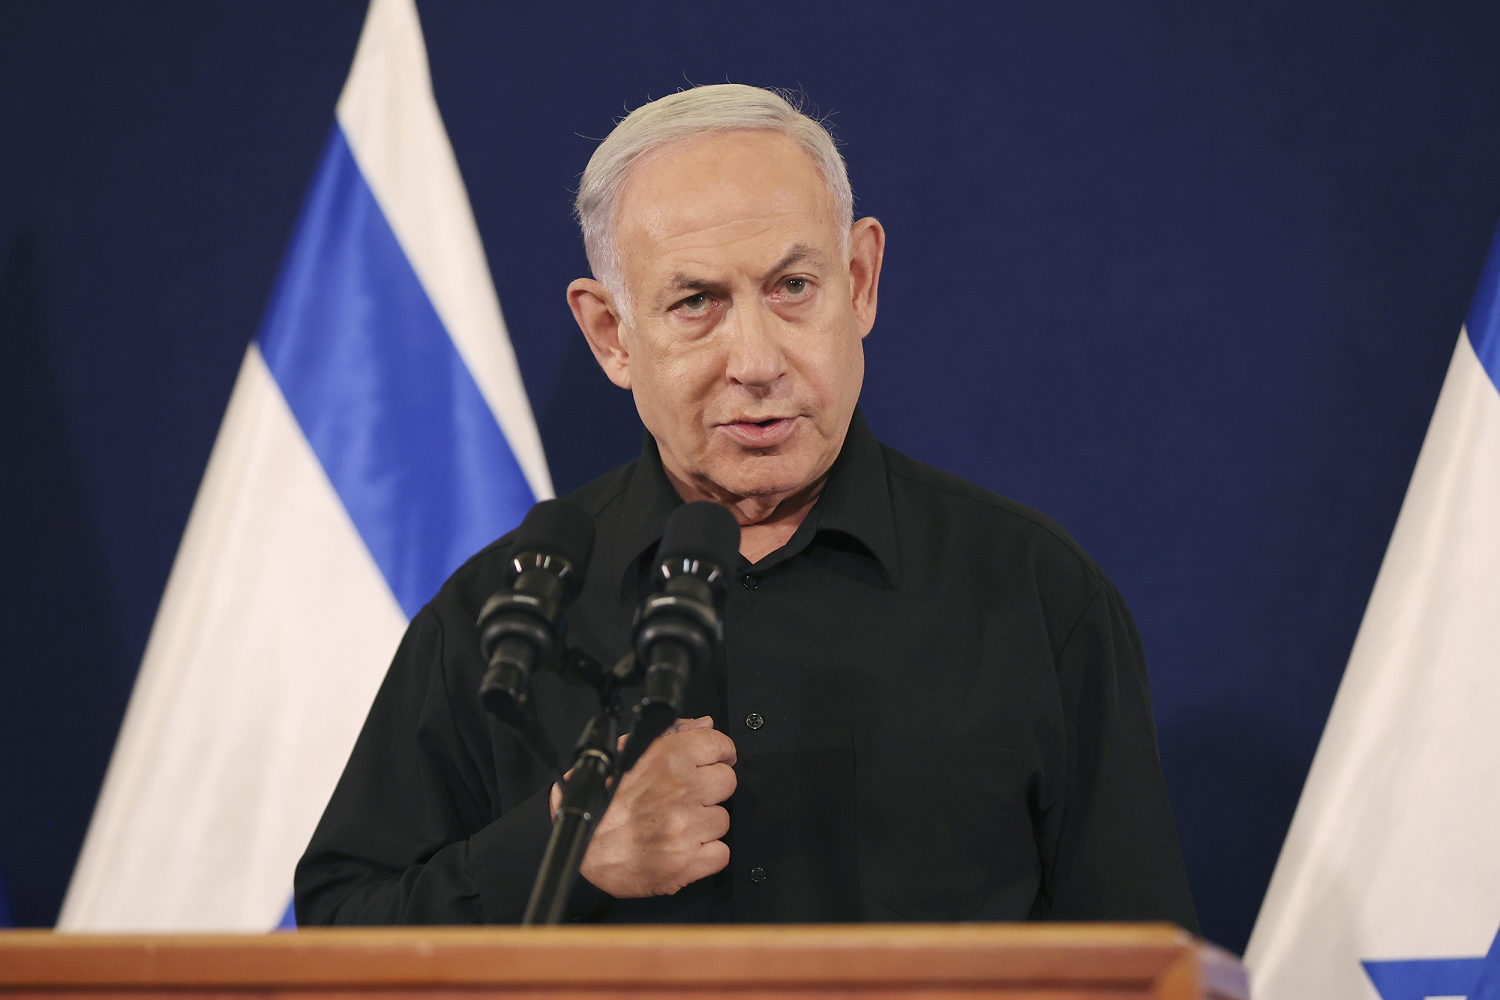 Netanyahu to address Congress and 'DEI' attacks on Kamala Harris: Morning Rundown